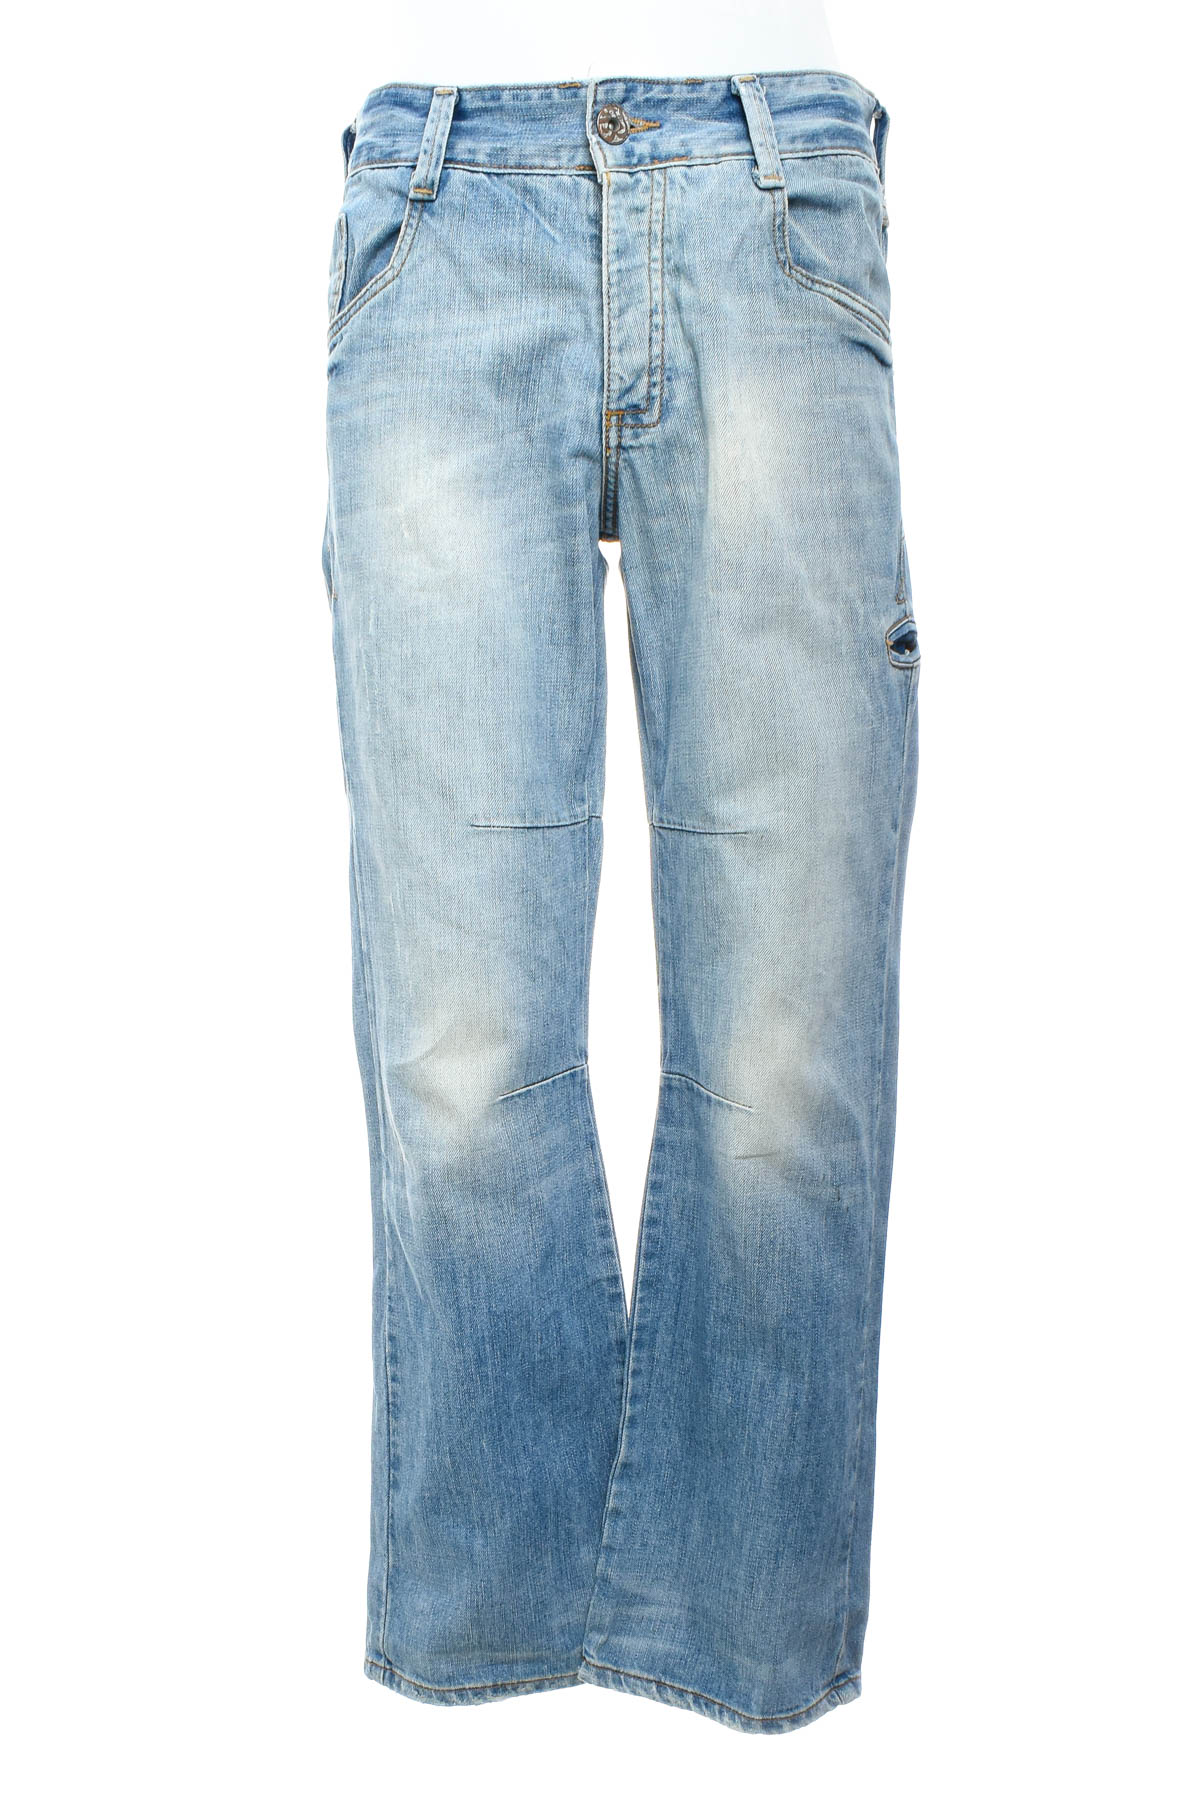 Men's jeans - Burton - 0